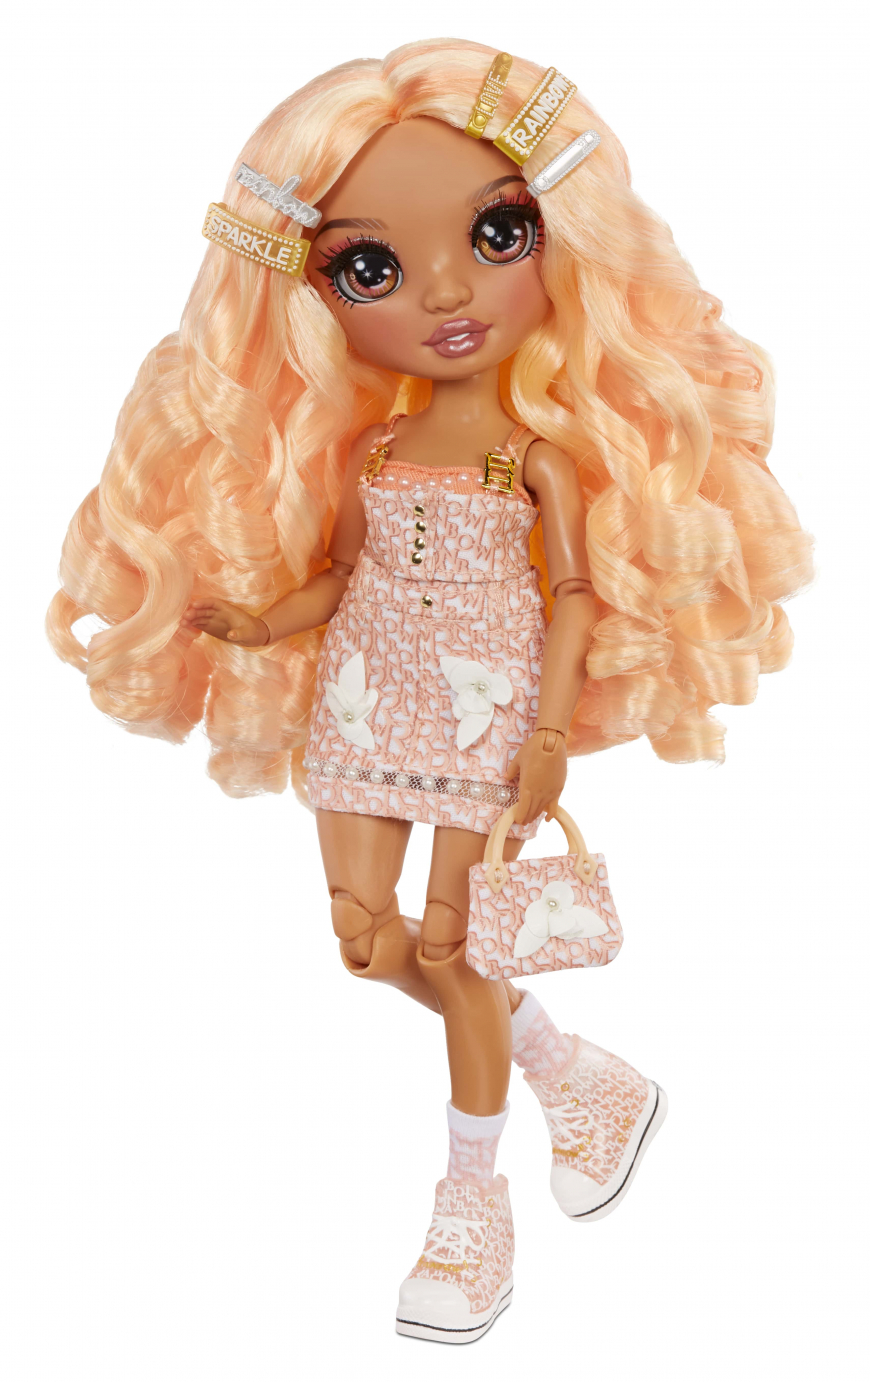 Rainbow High Series 3 Peach doll Georgia Bloom doll In second outfit